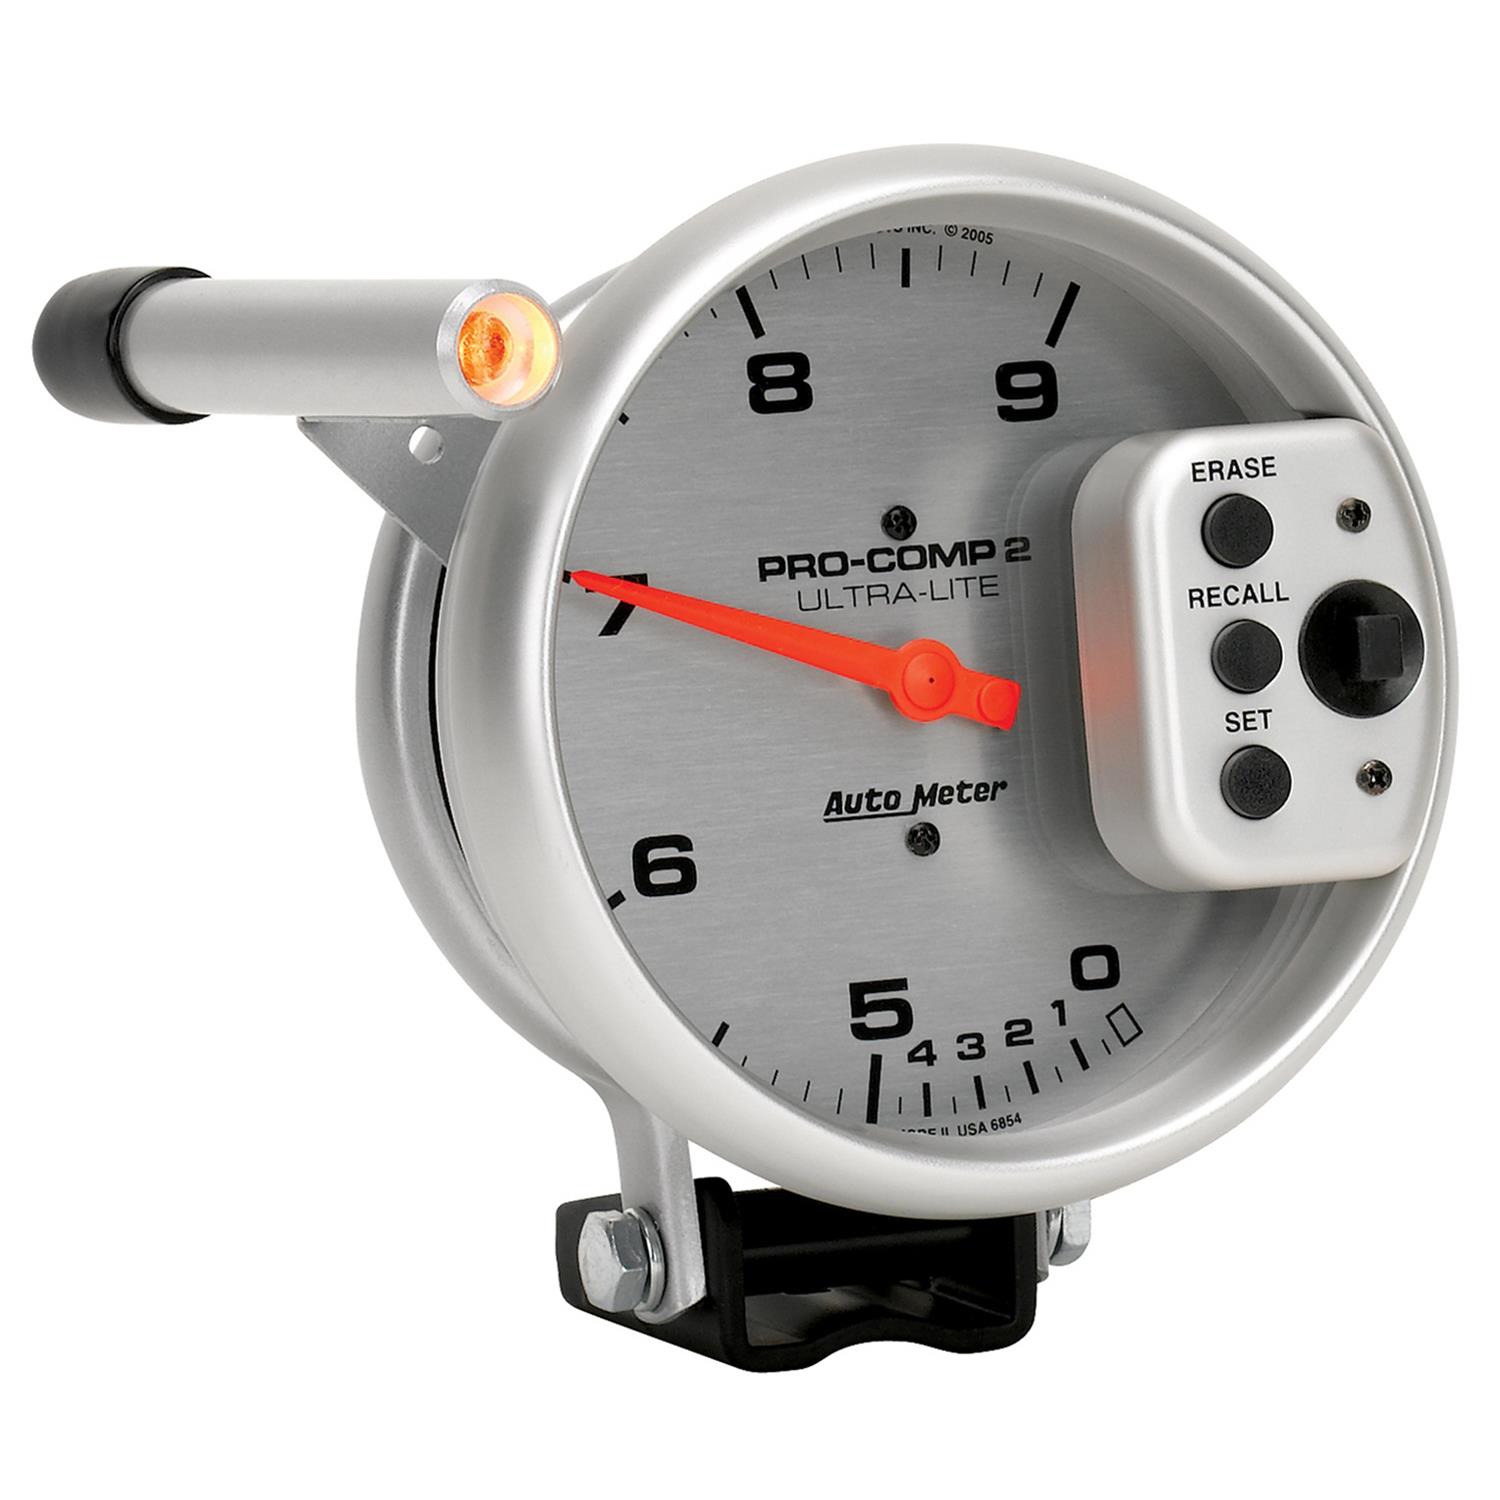 Auto Meter 5210 Tachometer Inductive Trigger